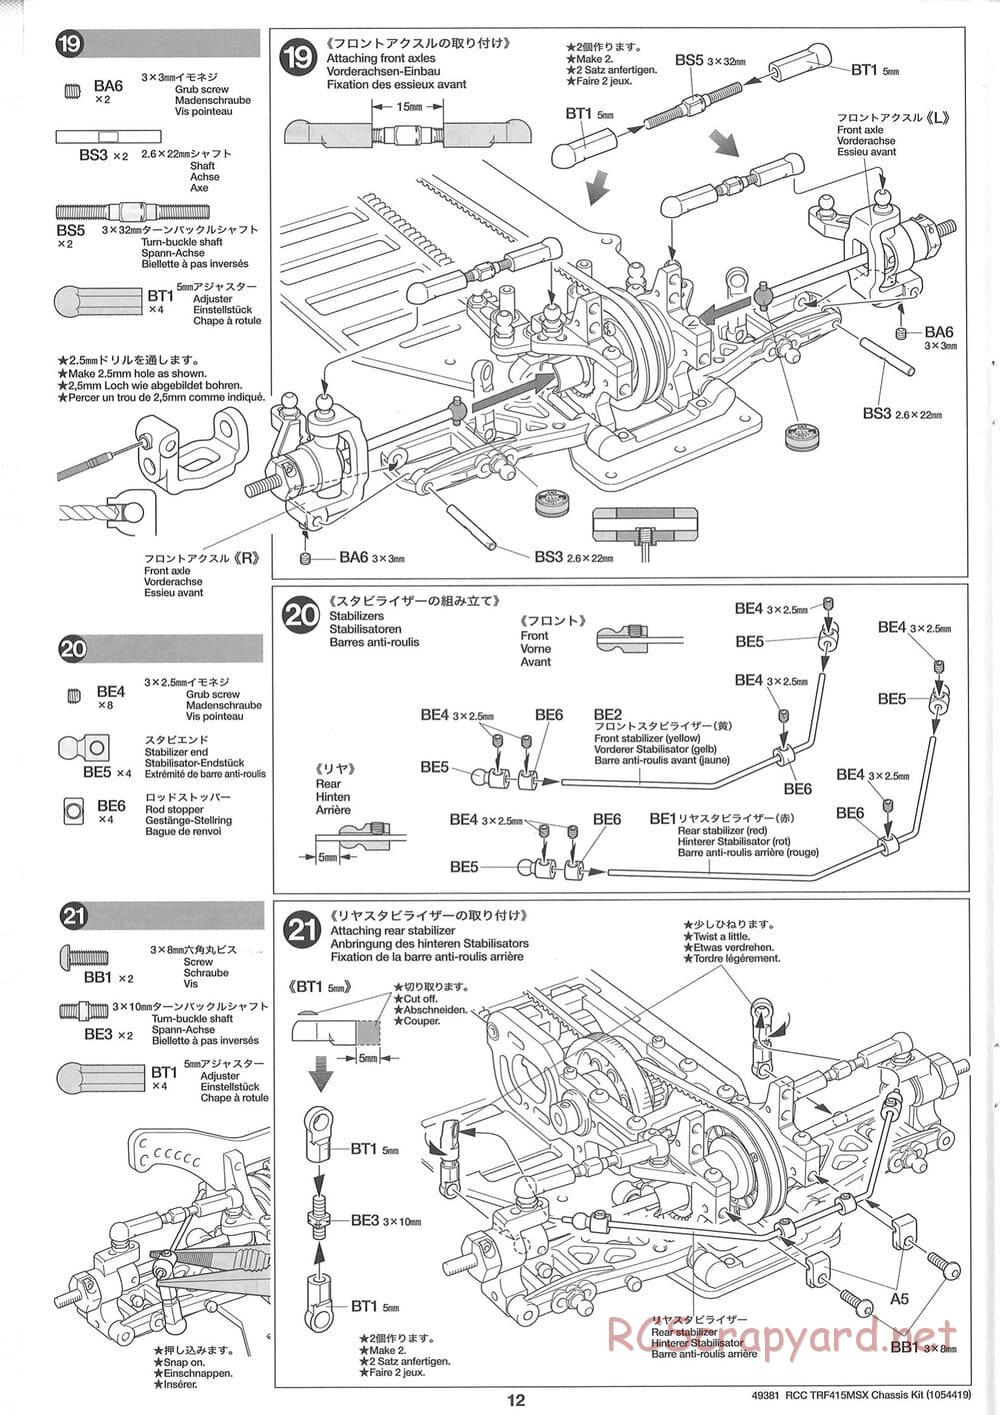 Tamiya - TRF415-MSX Chassis - Manual - Page 12